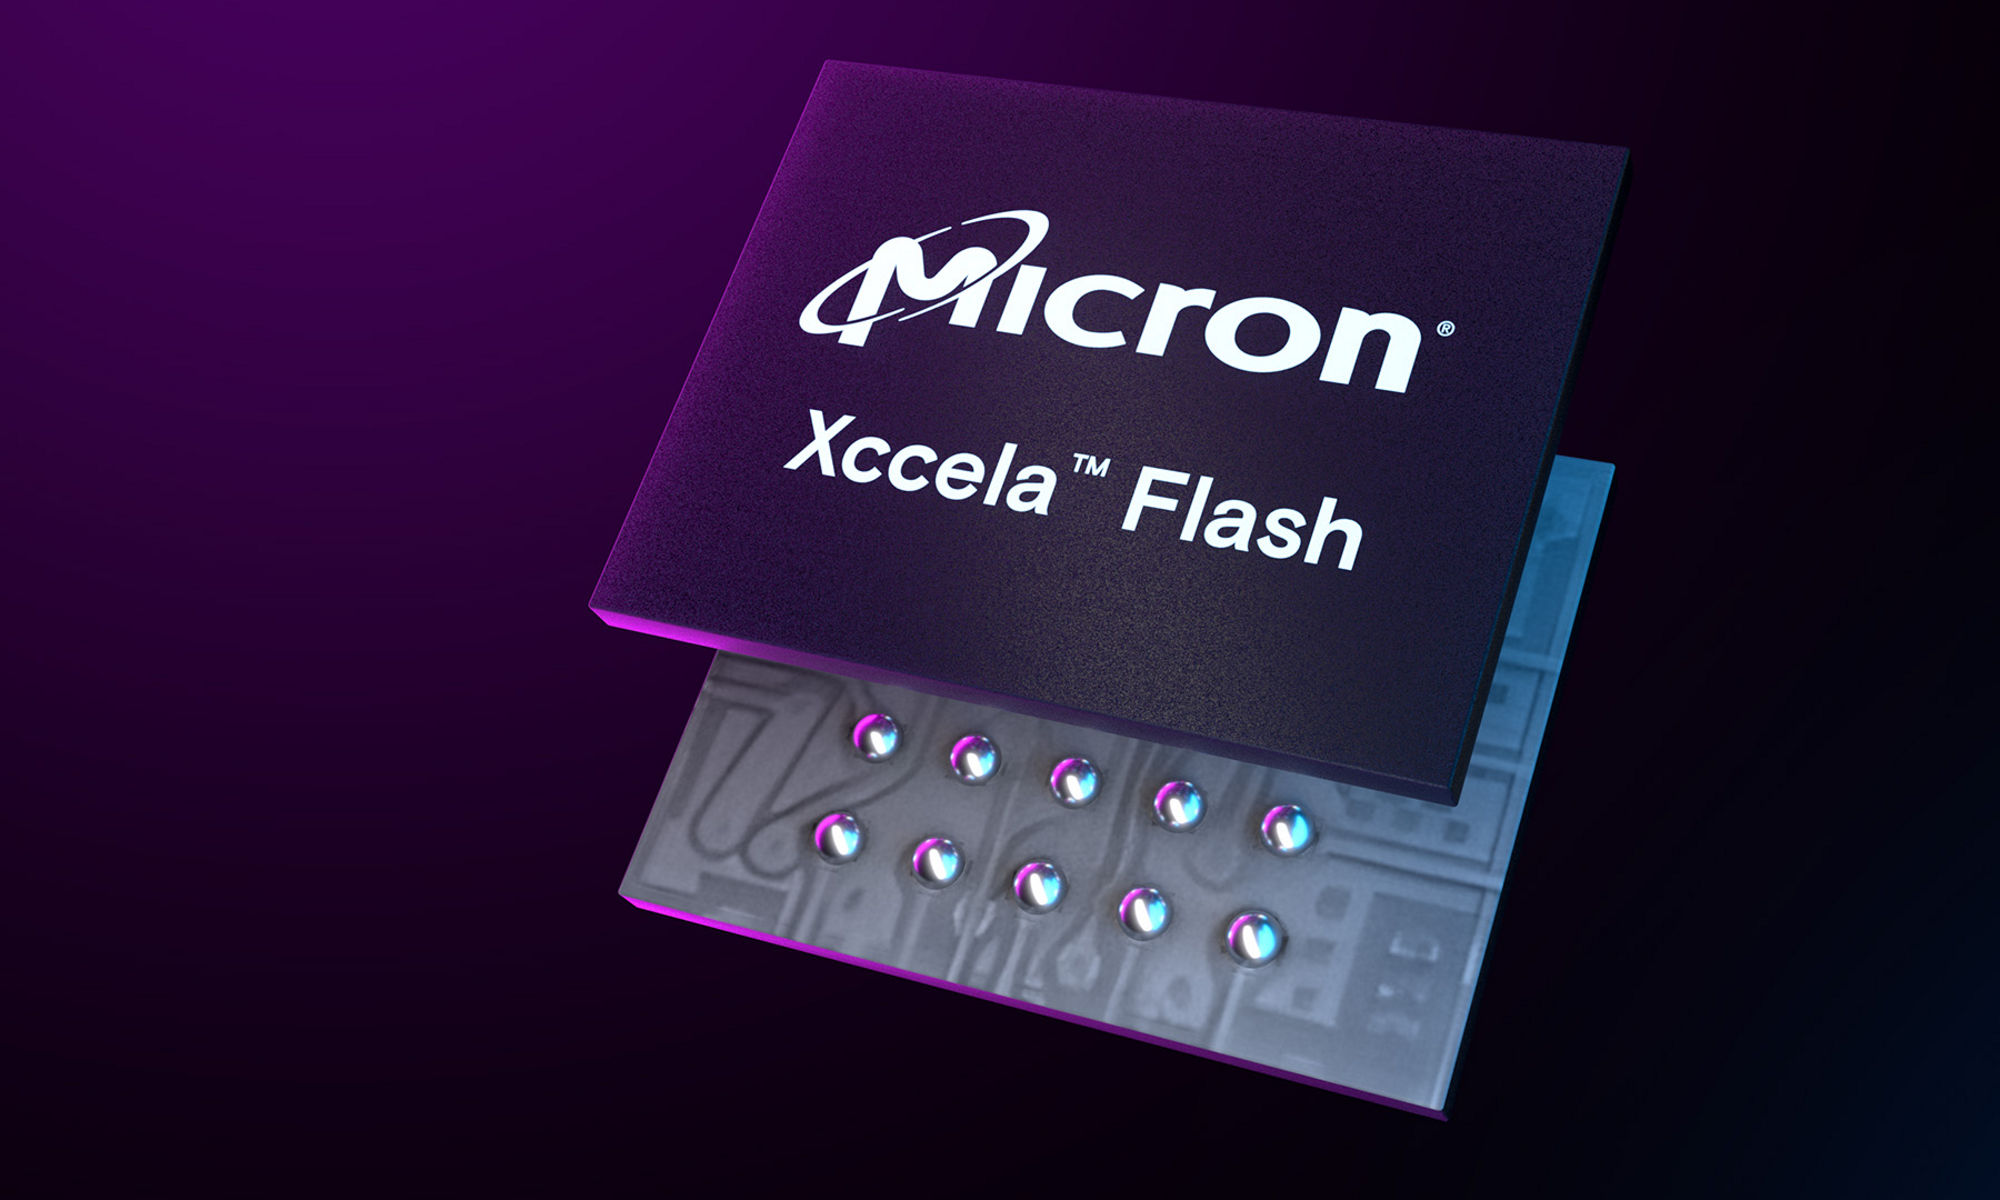 Micron Xccela Flash product